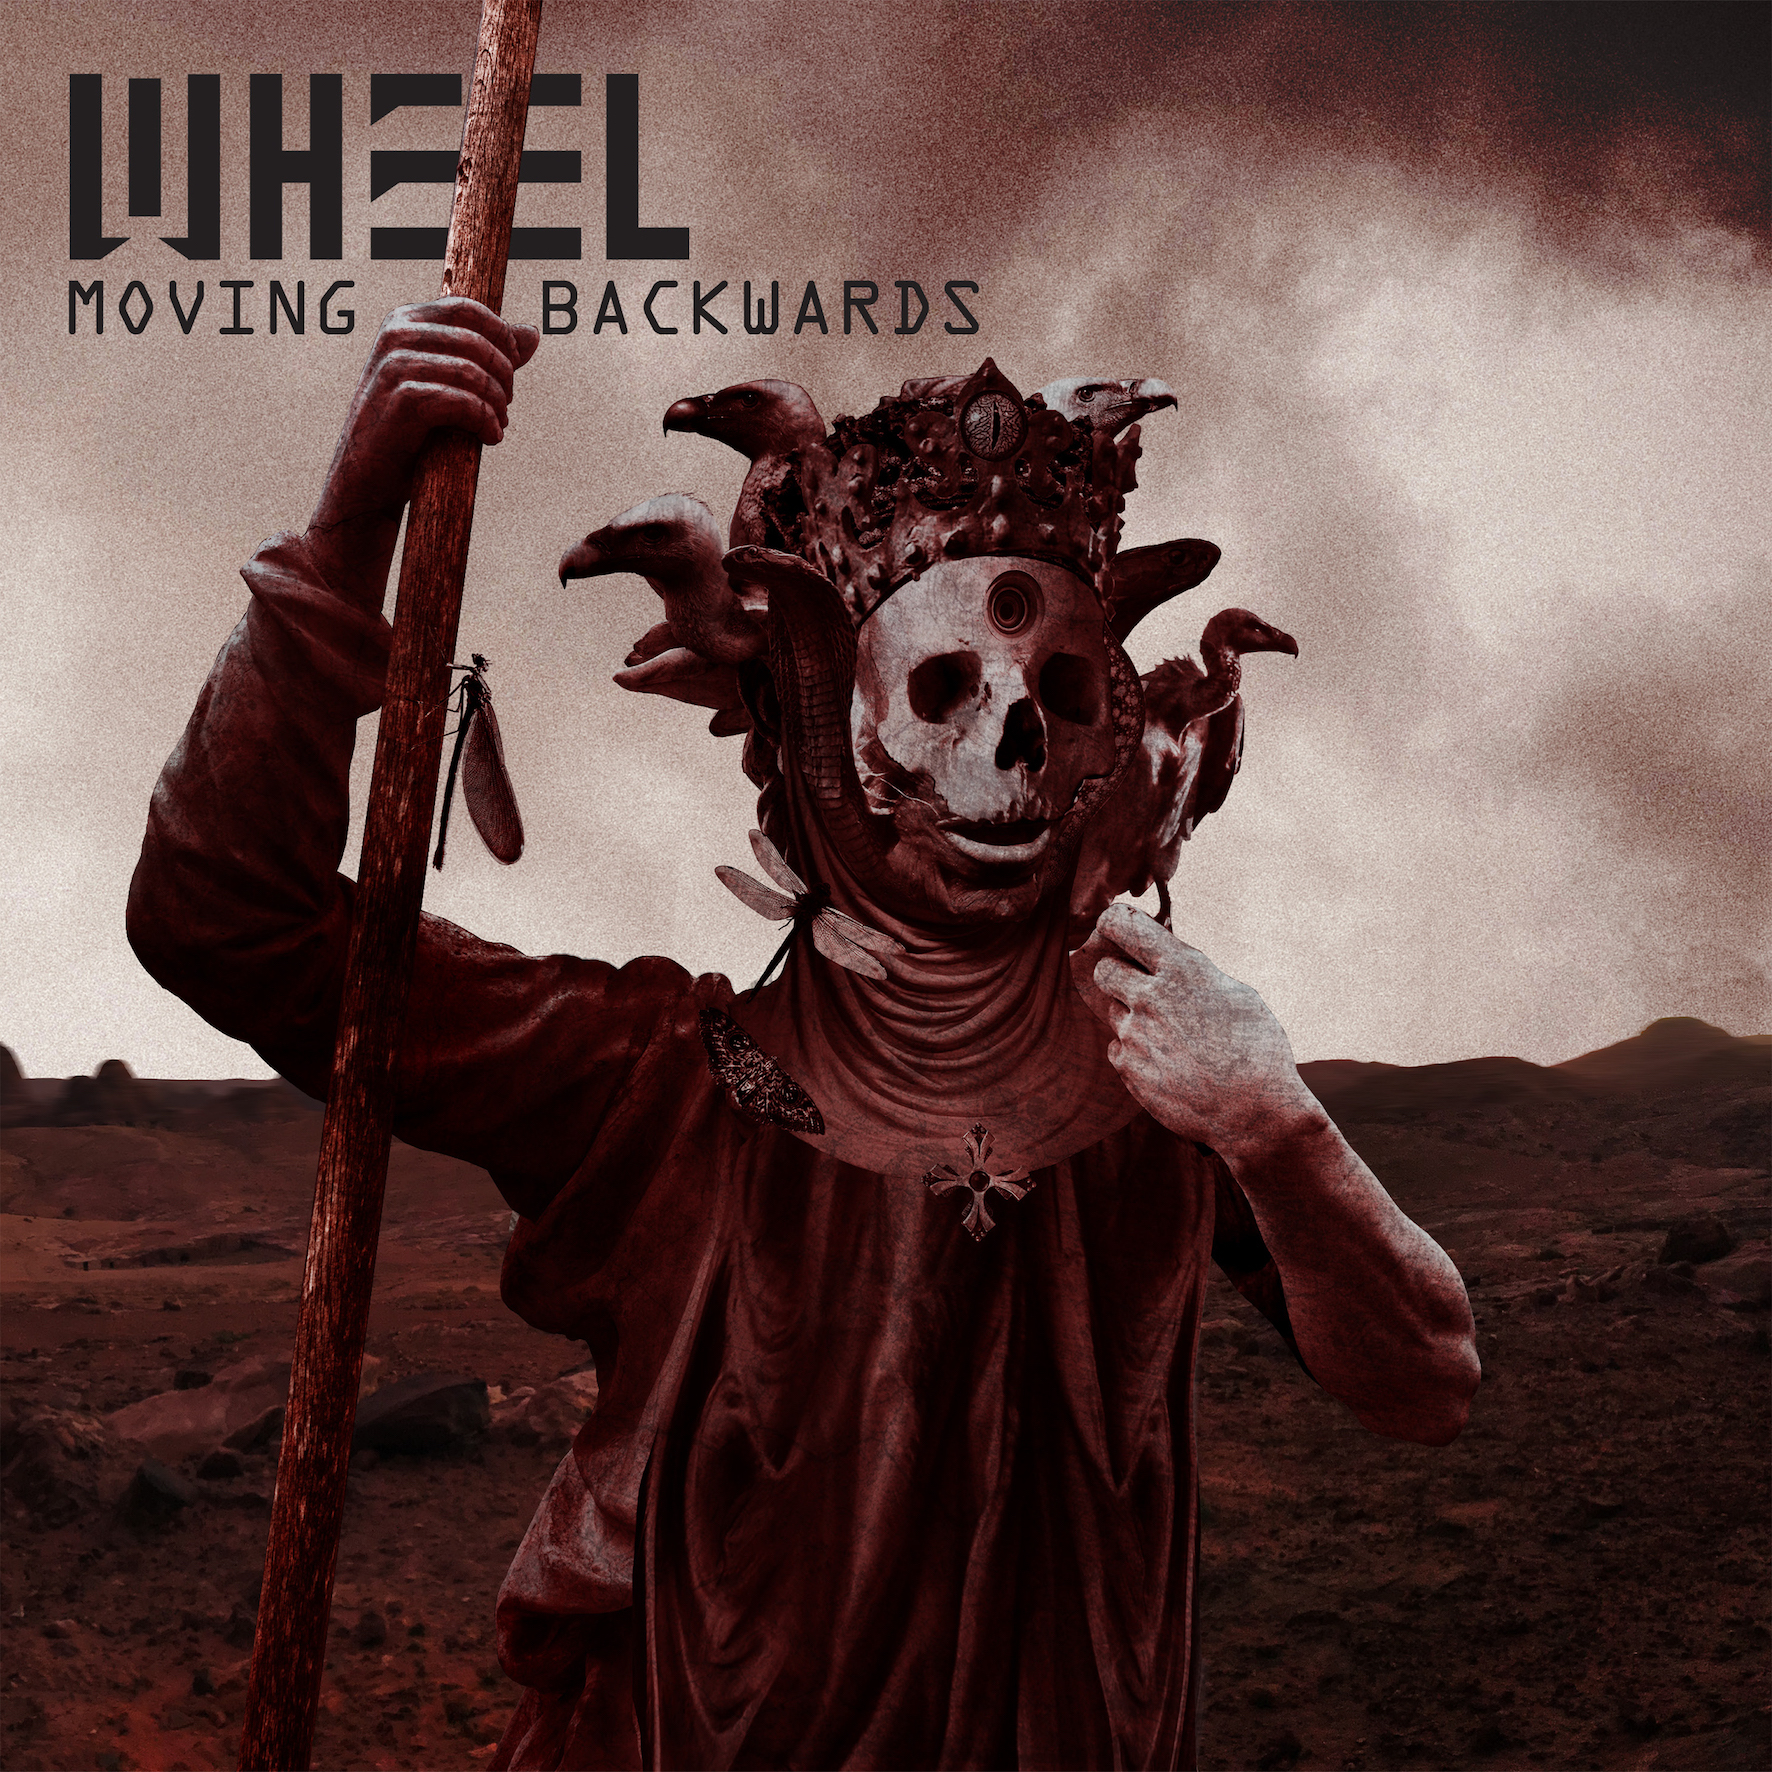 WHEEL - Moving Backwards [DIGIPAK CD]